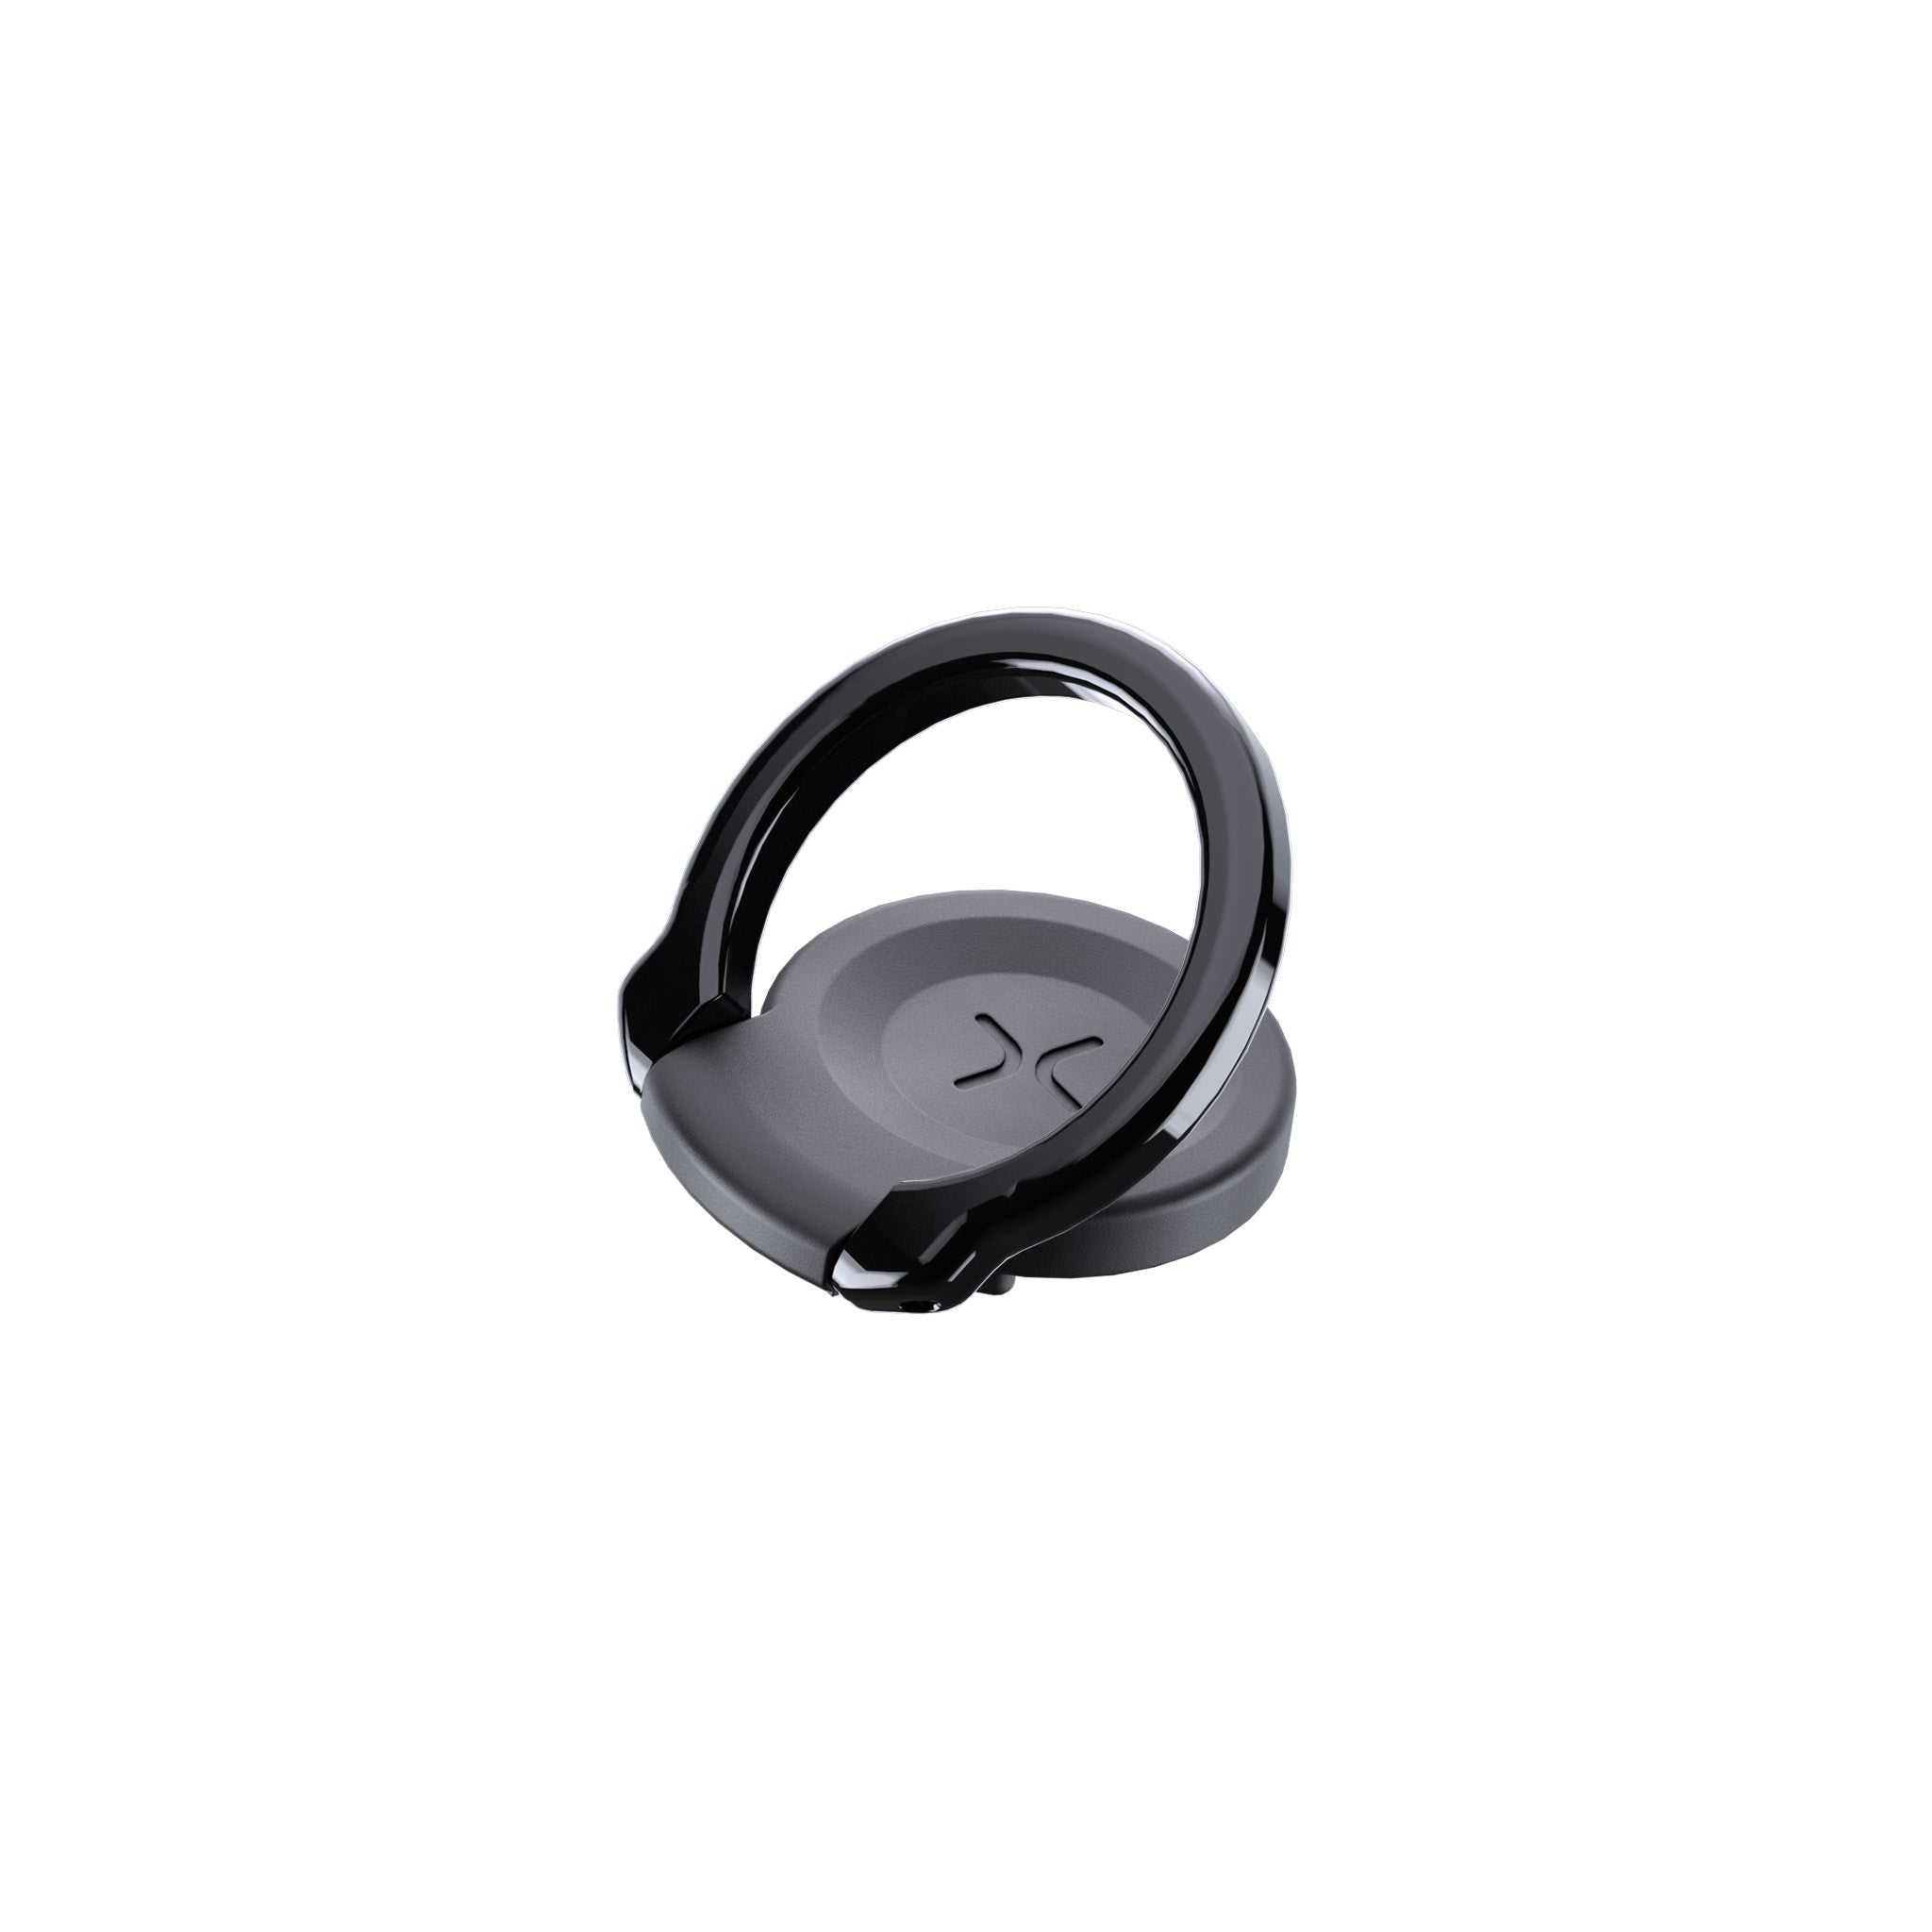 Audio/Visual Phone Notifier - Auto Hang Up - Elderly Aid - Loud Ring/Flash  | eBay